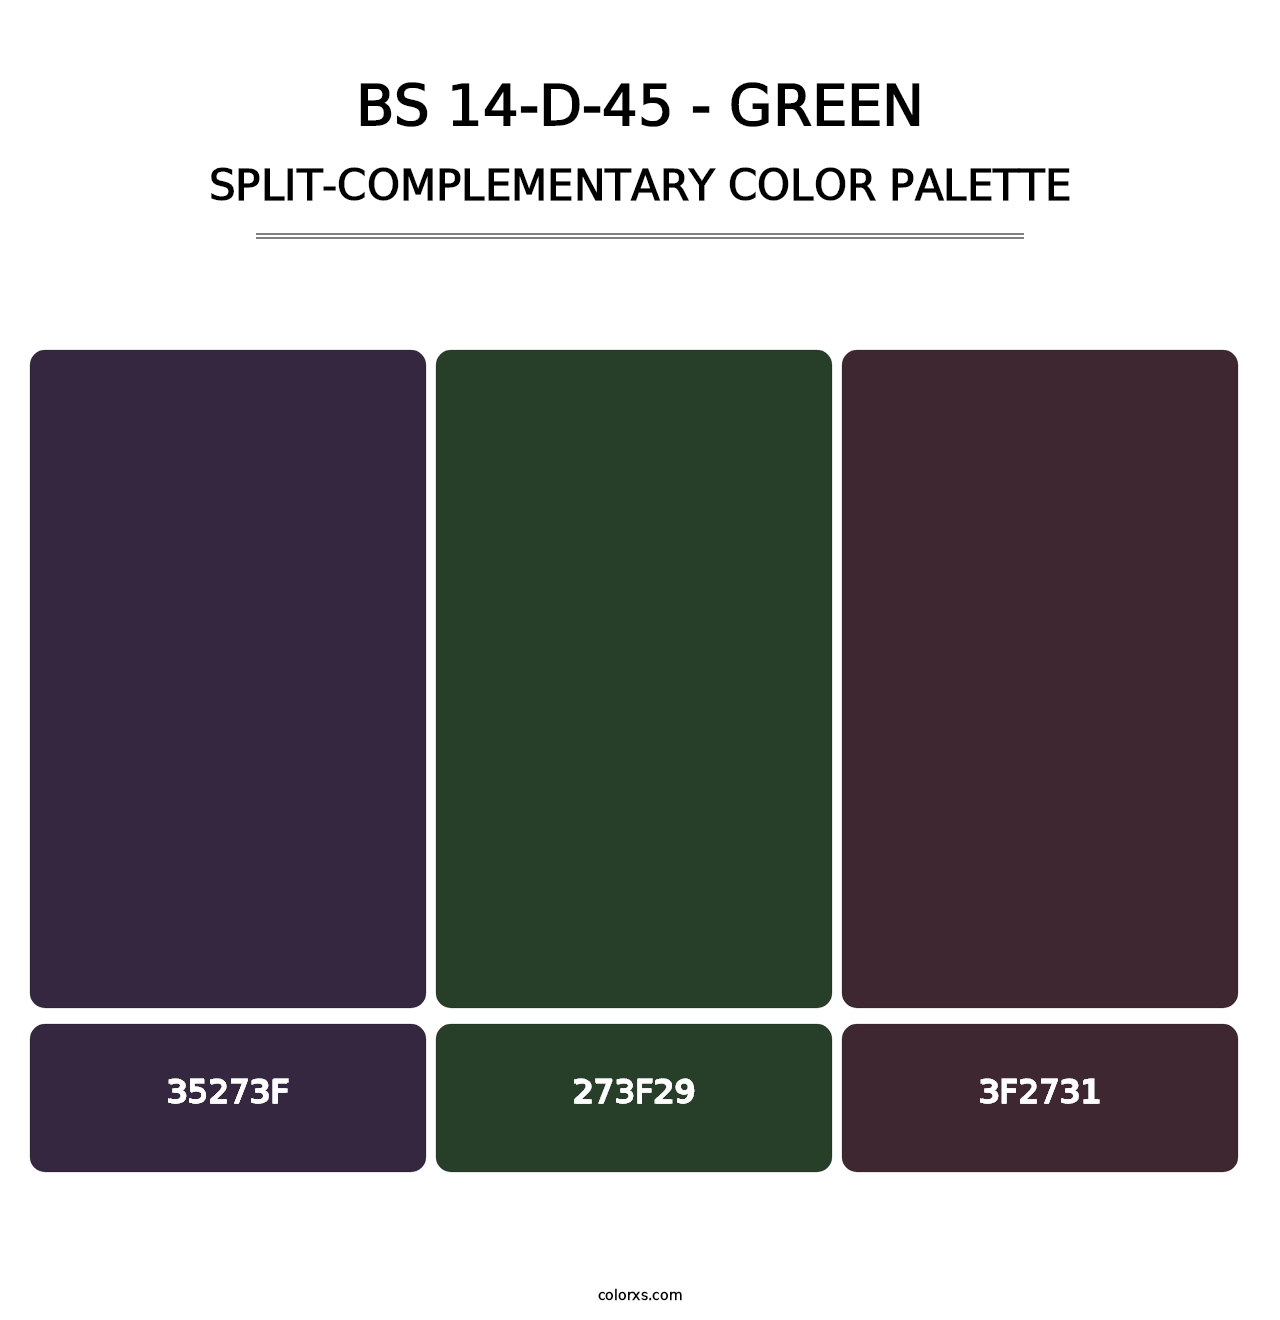 BS 14-D-45 - Green - Split-Complementary Color Palette